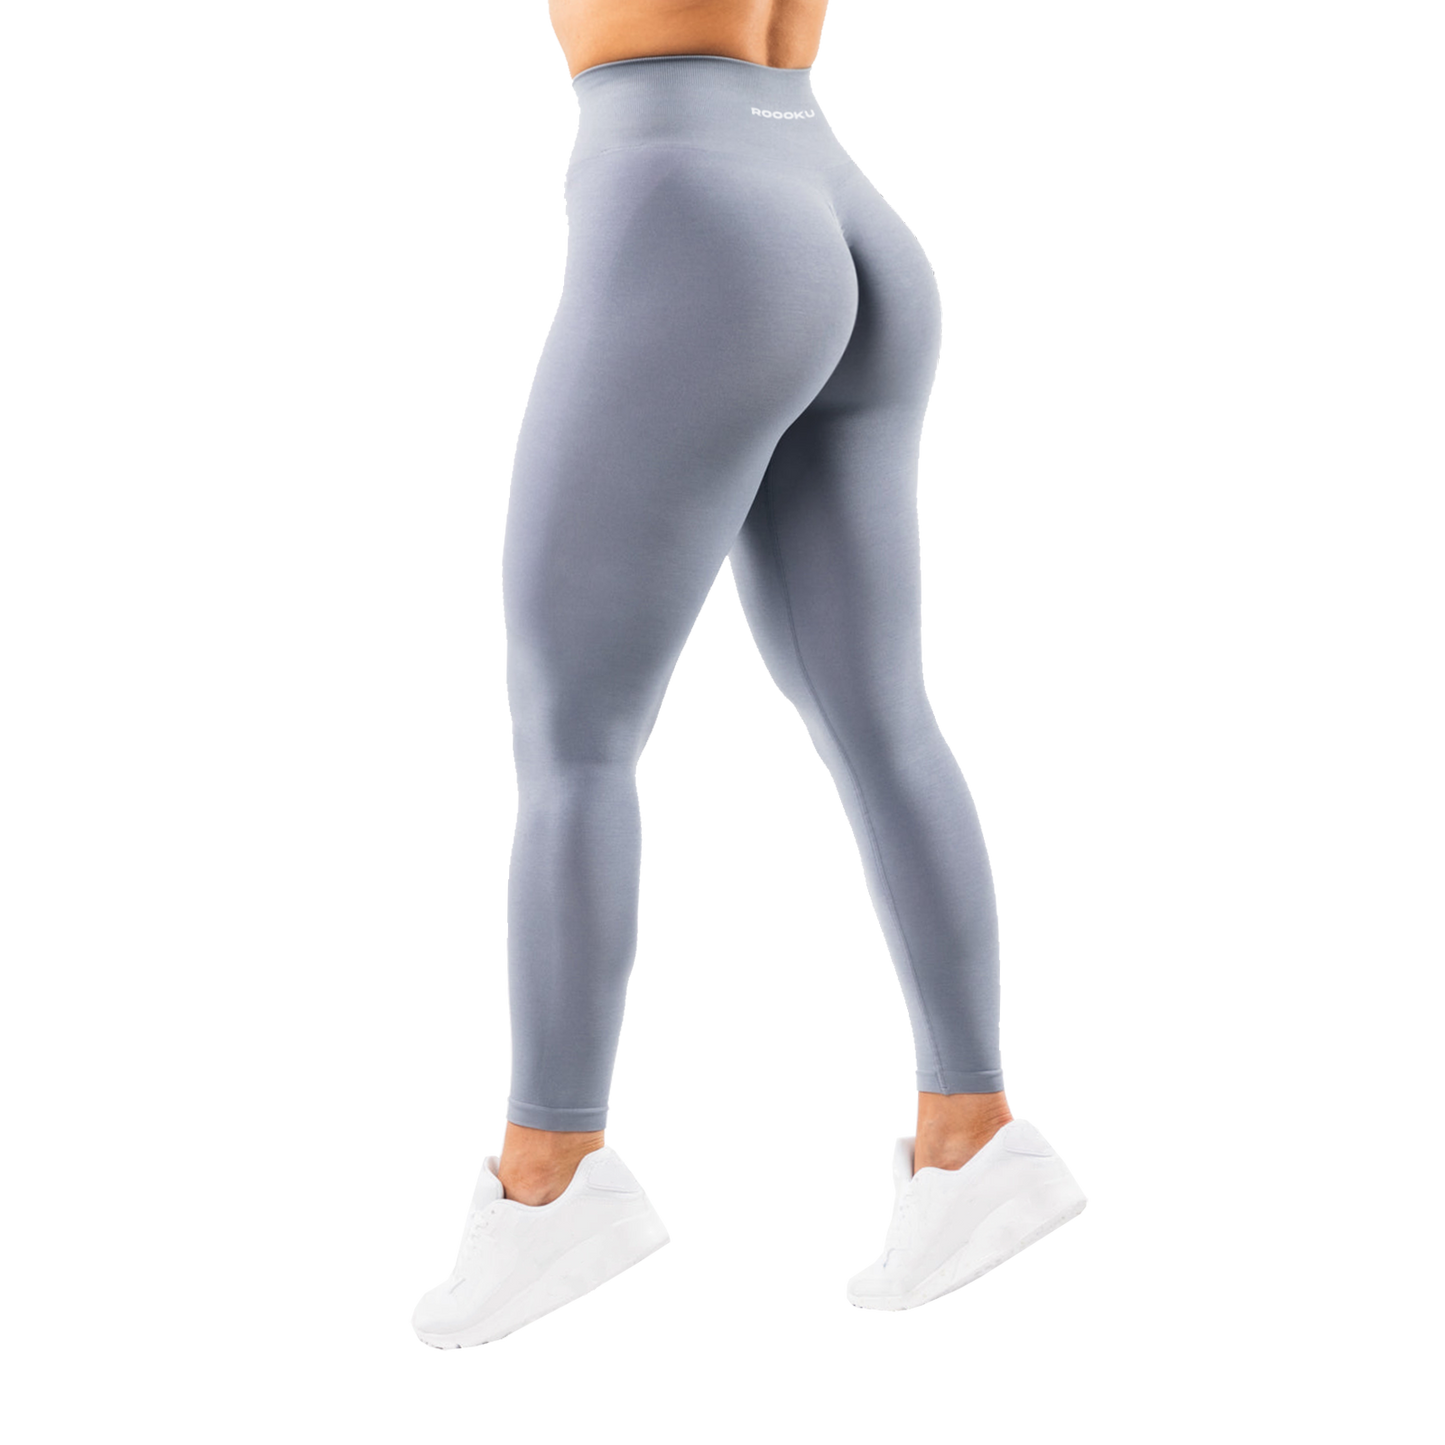 ROOOKU Uplift Squat Proof Workout Leggings for Women Anti-Ripped